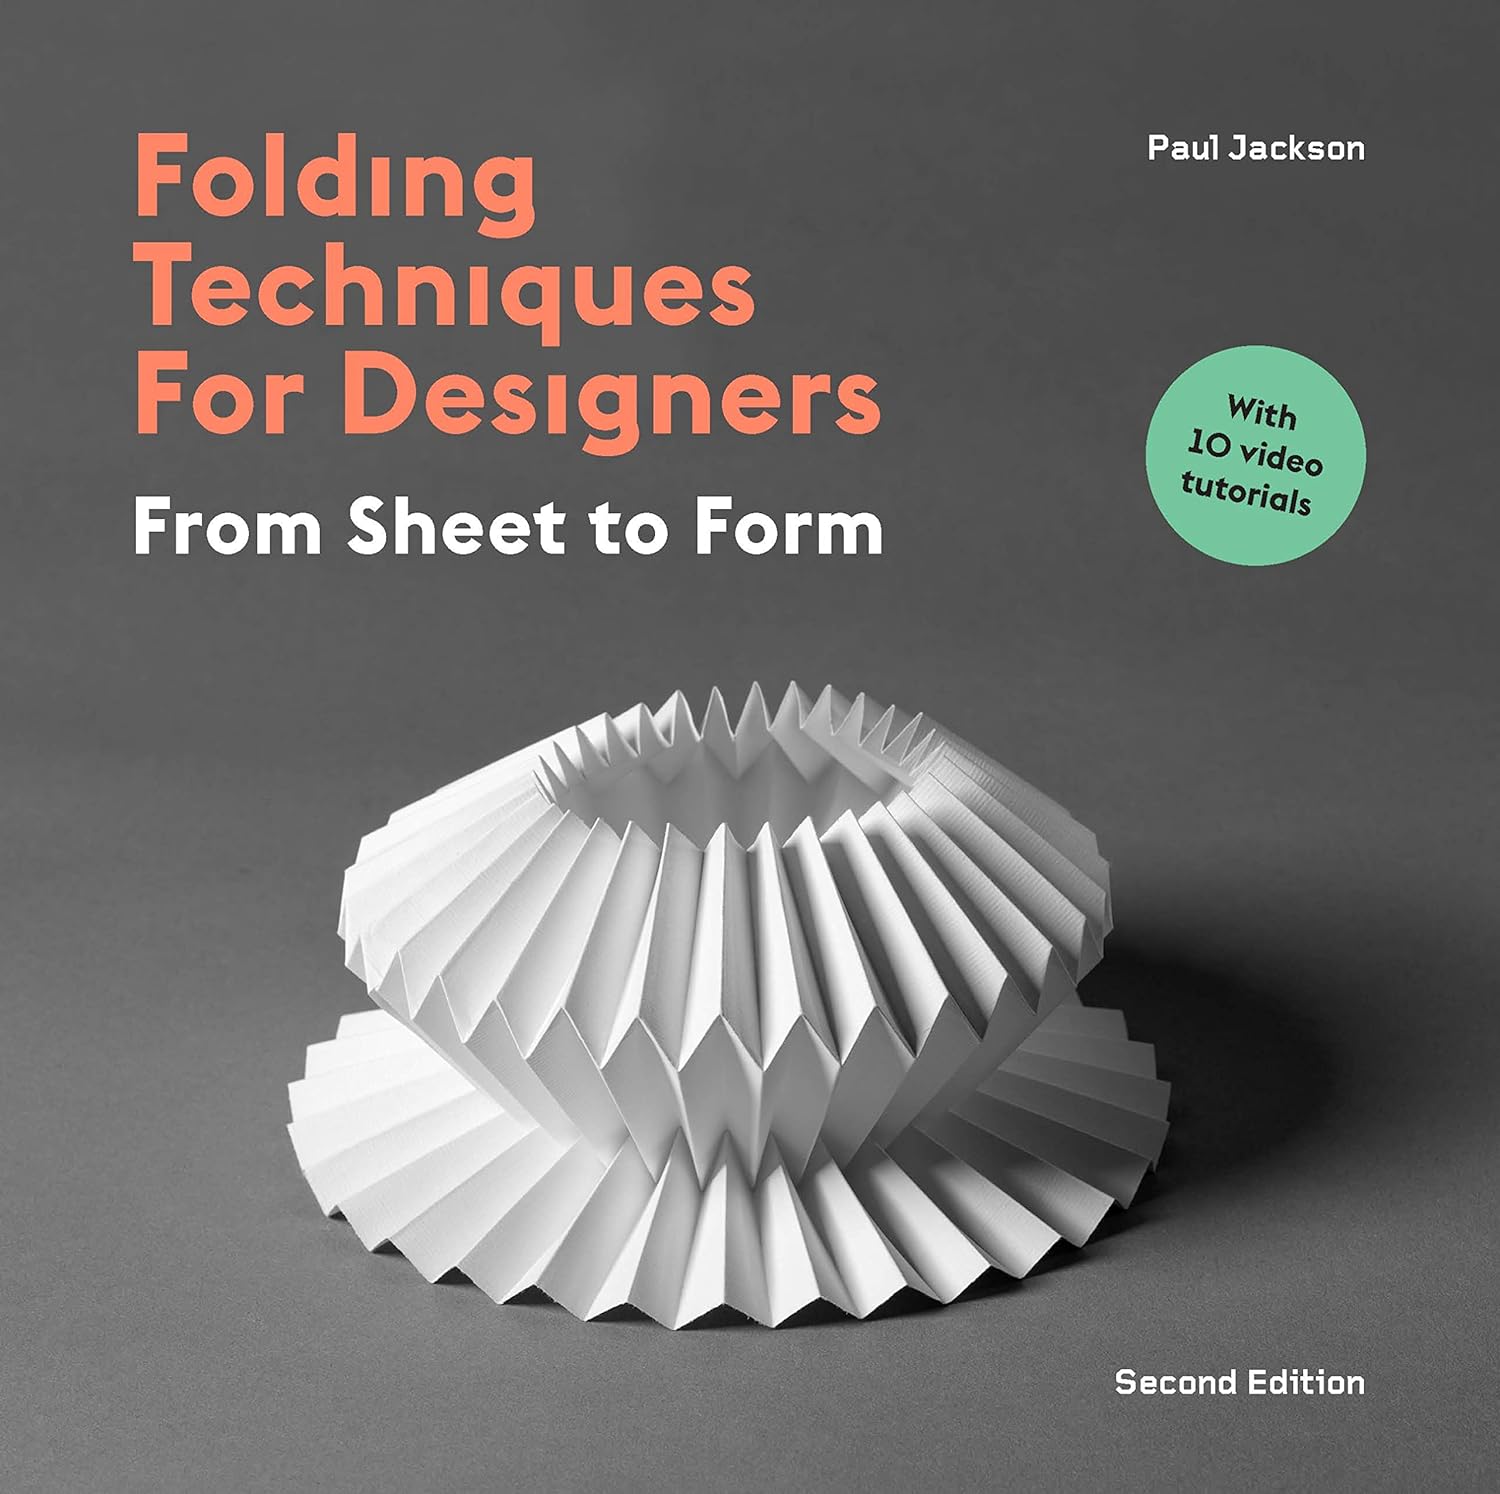 Folding tecniques for Designers